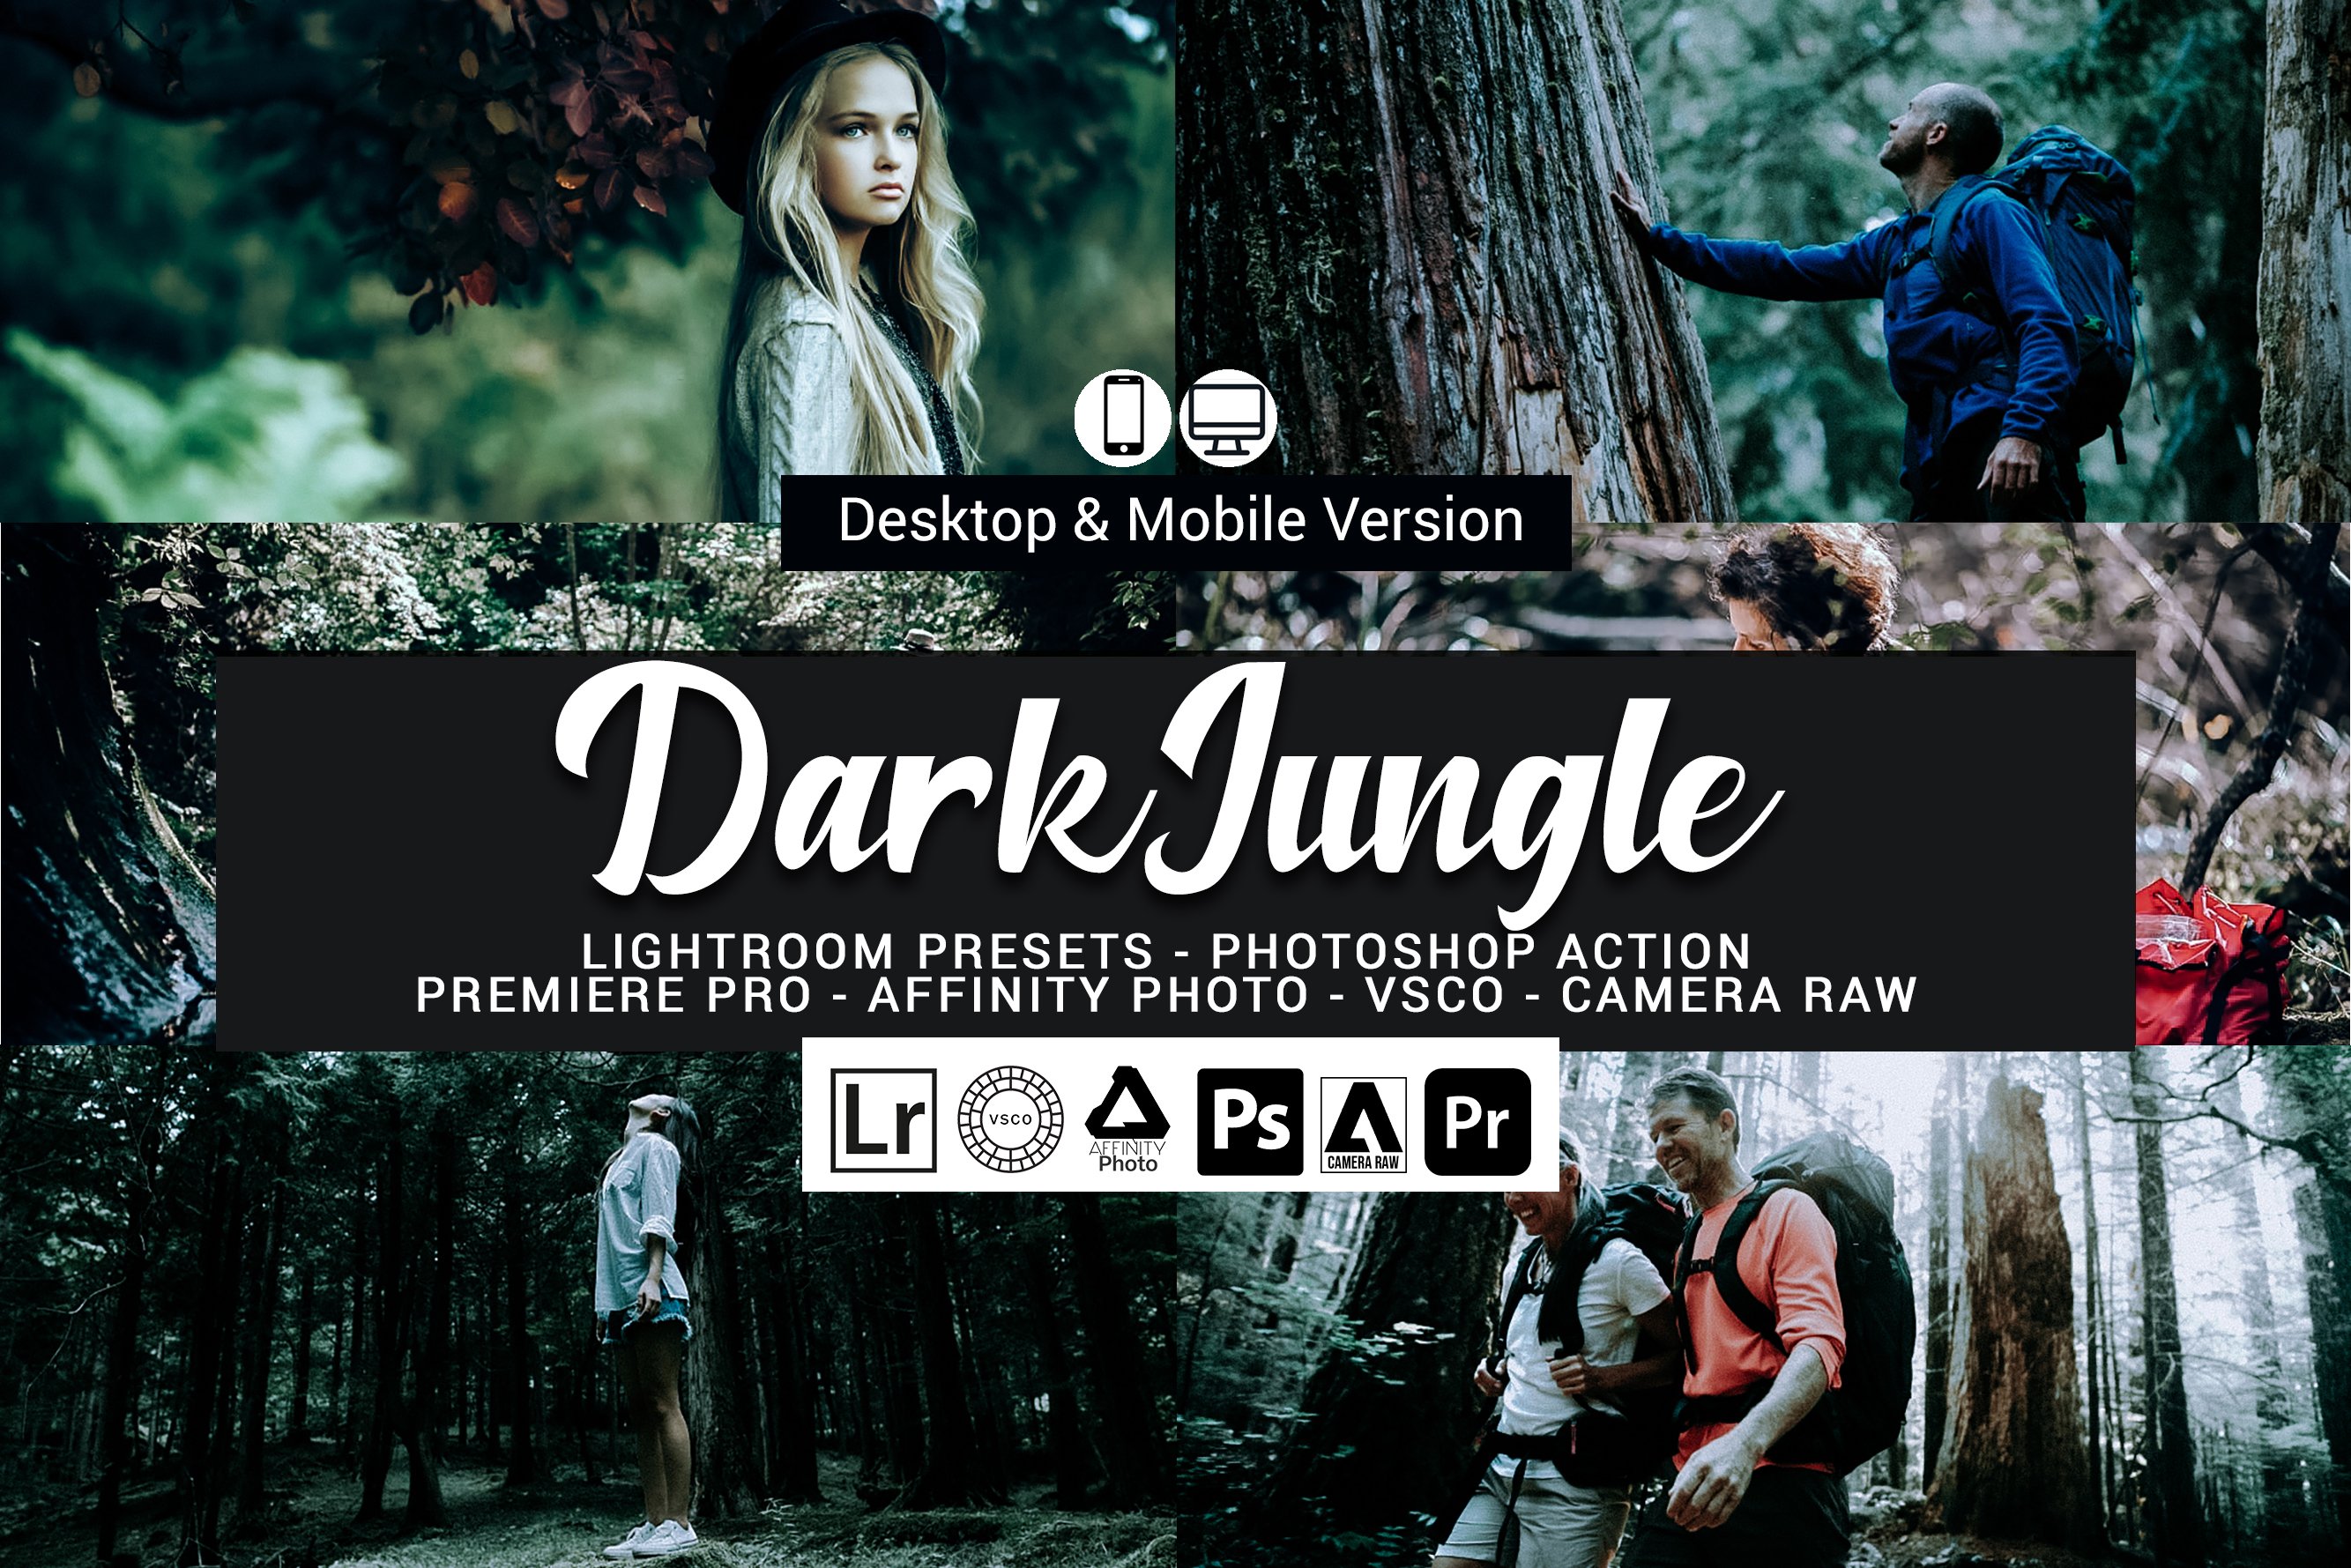 Dark Jungle Presetscover image.